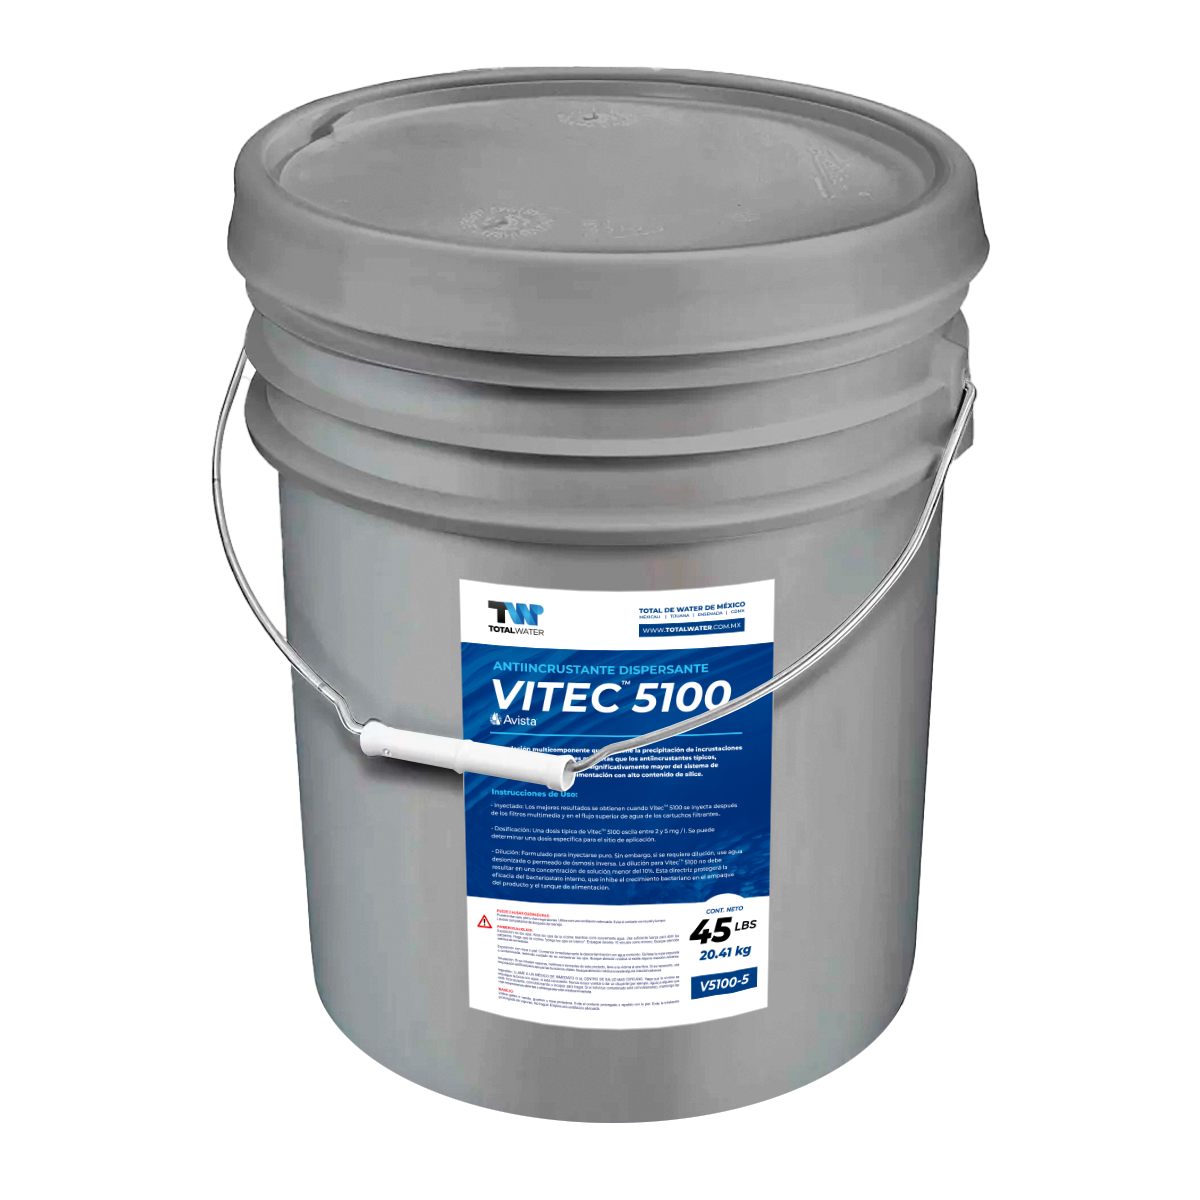 Anti-incrustante Dispersante - Vitec 5100 - 45 lbs (20.41 kg) - AVISTA